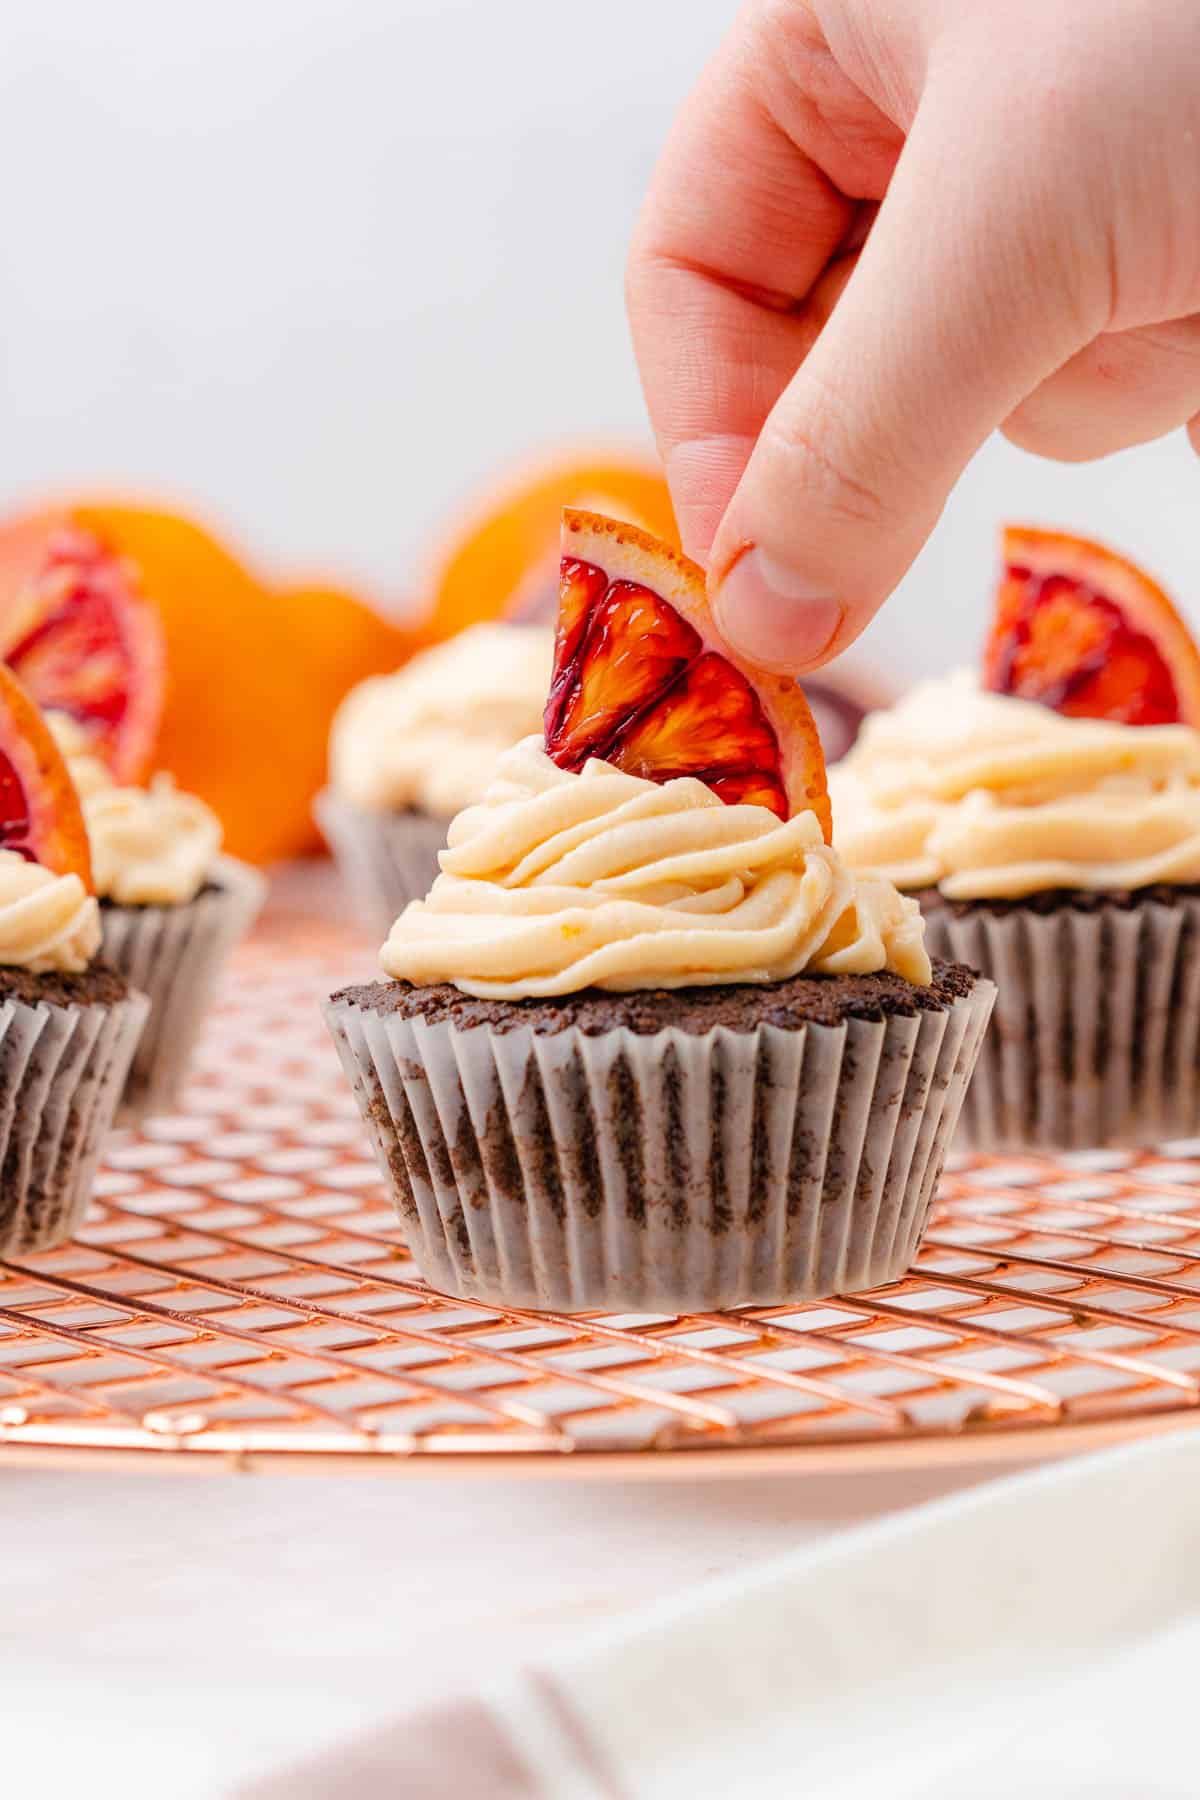 placing a piece of blood orange onto a cupcake